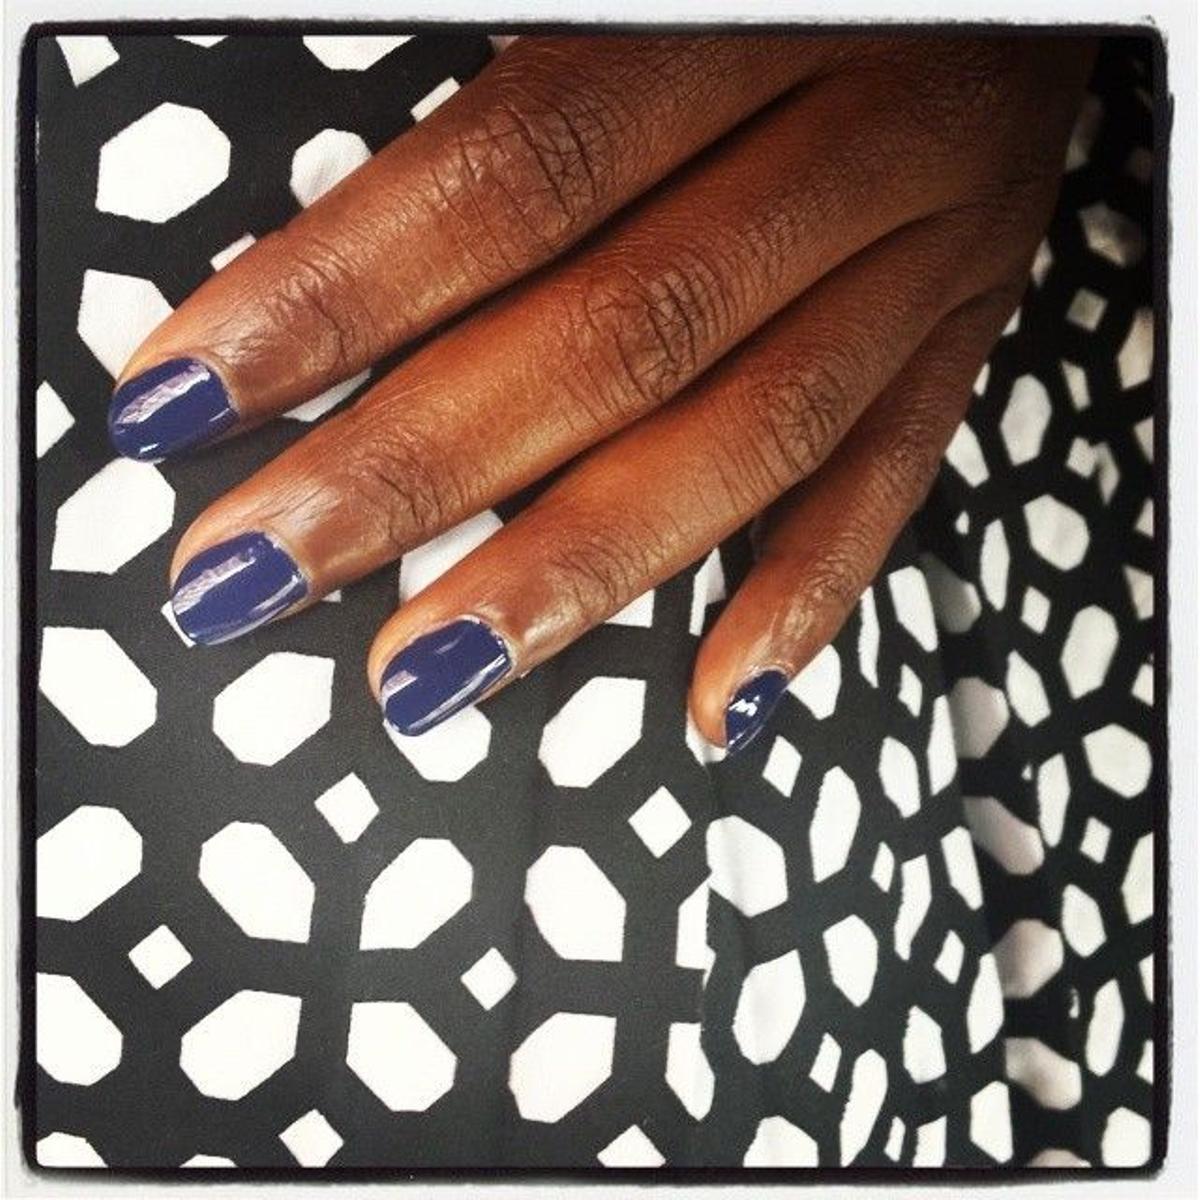 Las uñas de Lupita Nyong'o